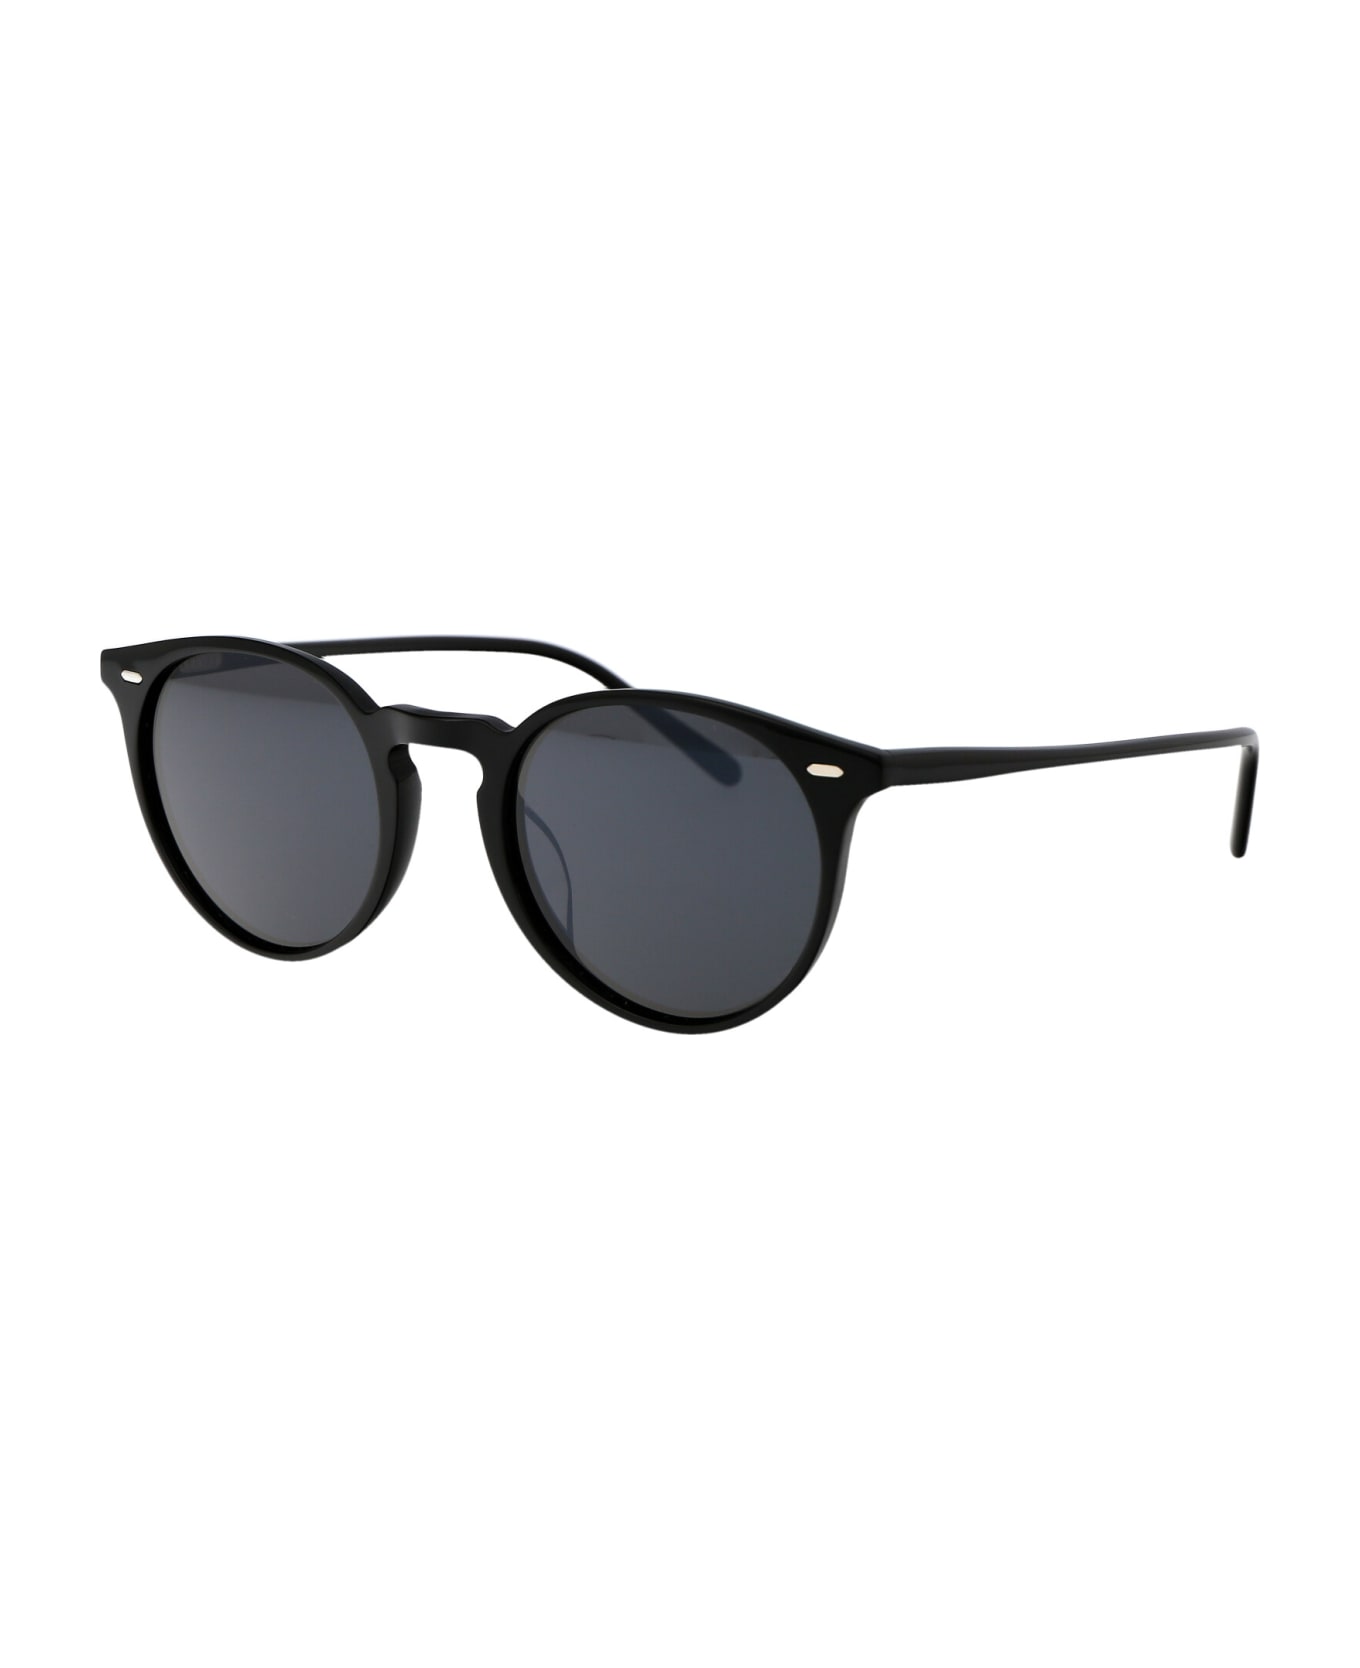 Oliver Peoples N.02 Sun Sunglasses - 1731R5 Black